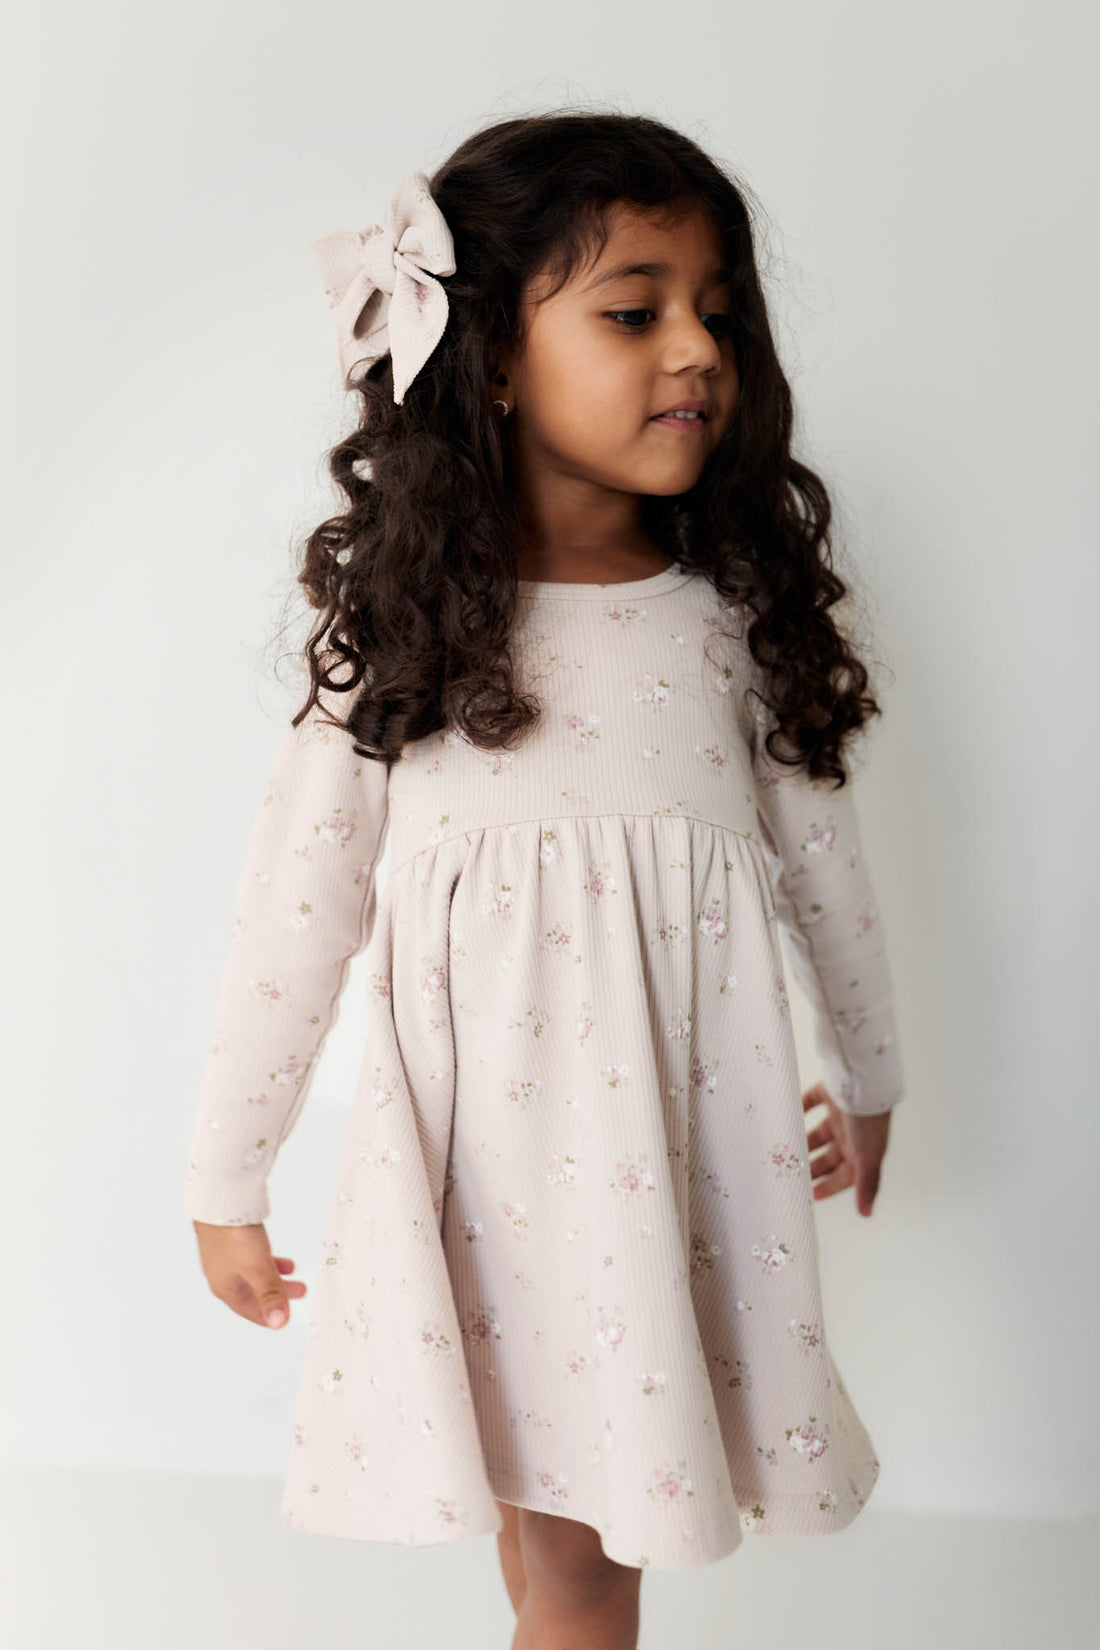 Organic Cotton Fine Rib Tallulah Dress - Petite Fleur Violet Childrens Dress from Jamie Kay NZ